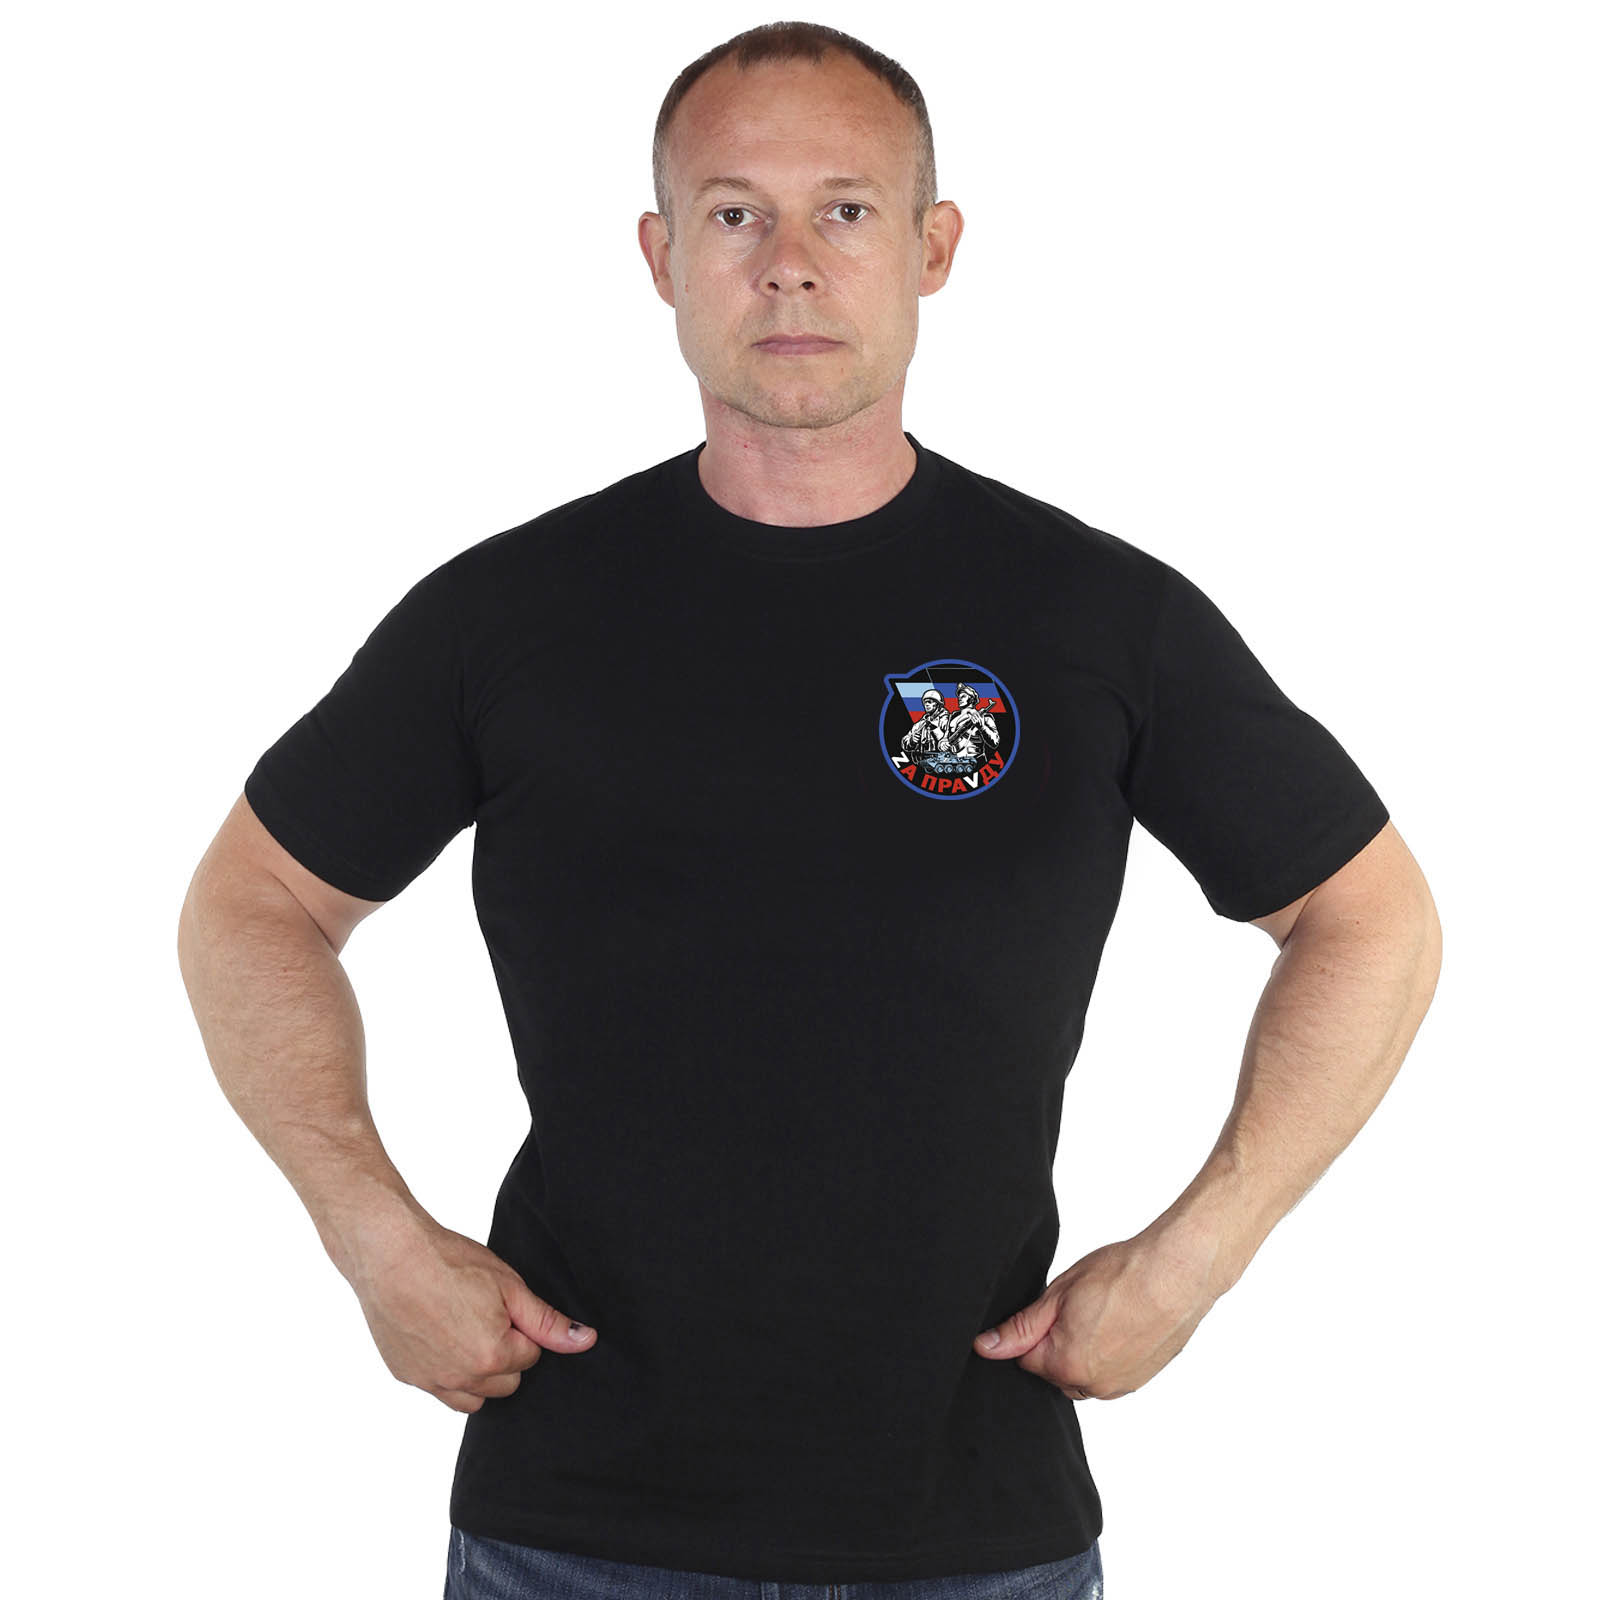 Чёрная футболка с трансфером "Zа праVду"